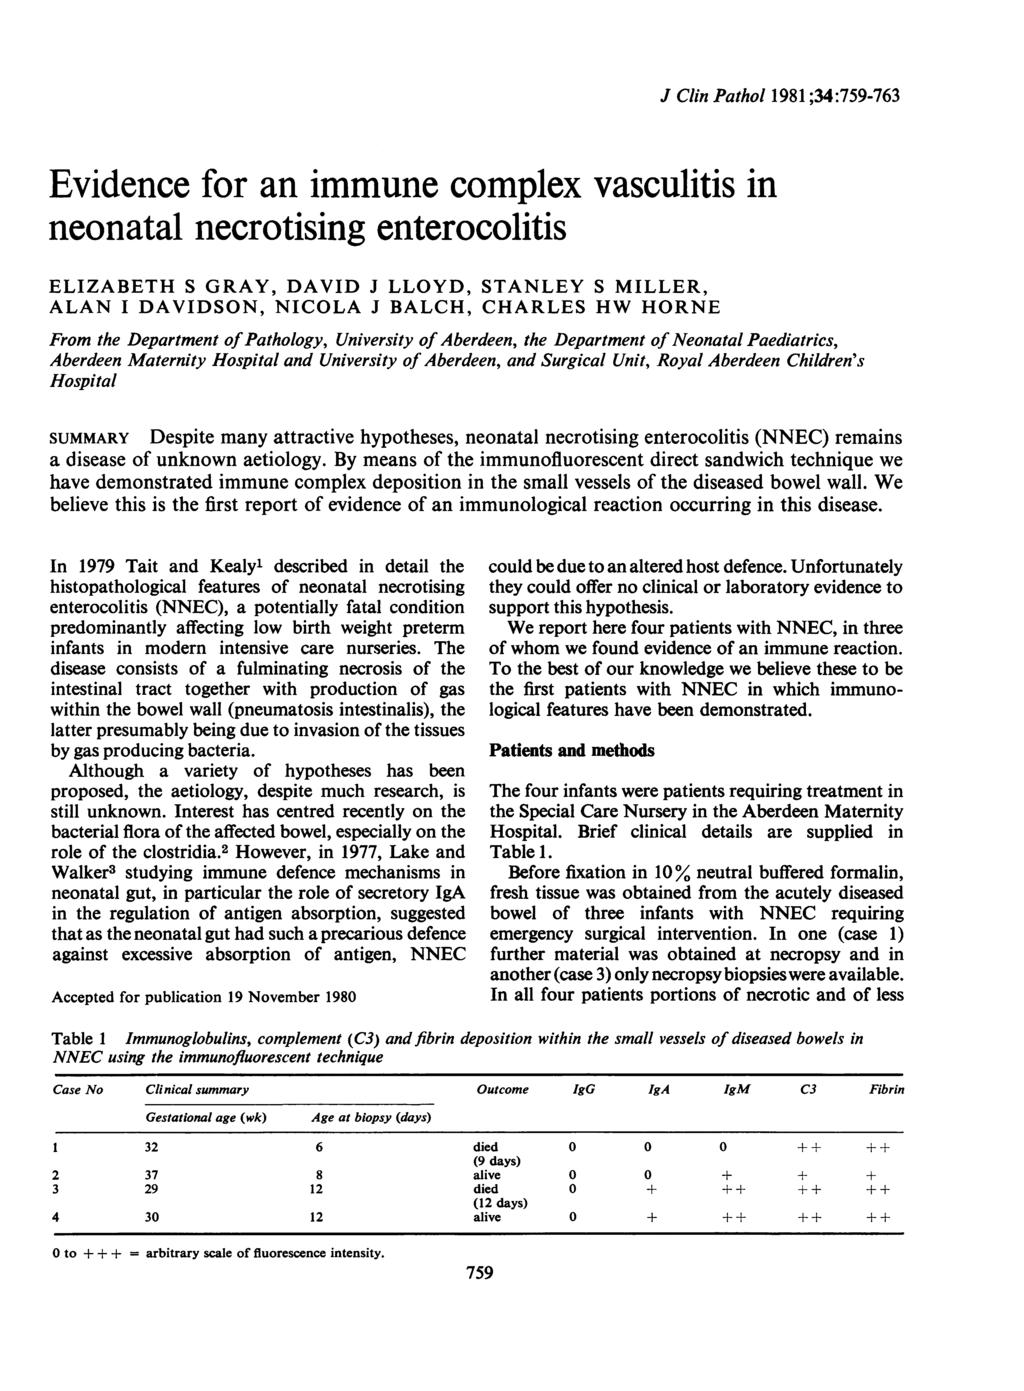 Evidence for an immune complex vasculitis in neonatal necrotising enterocolitis ELIZABETH S GRAY, DAVID J LLOYD, STANLEY S MILLER, ALAN I DAVIDSON, NICOLA J BALCH, CHARLES HW HORNE J Clin Pathol 1981